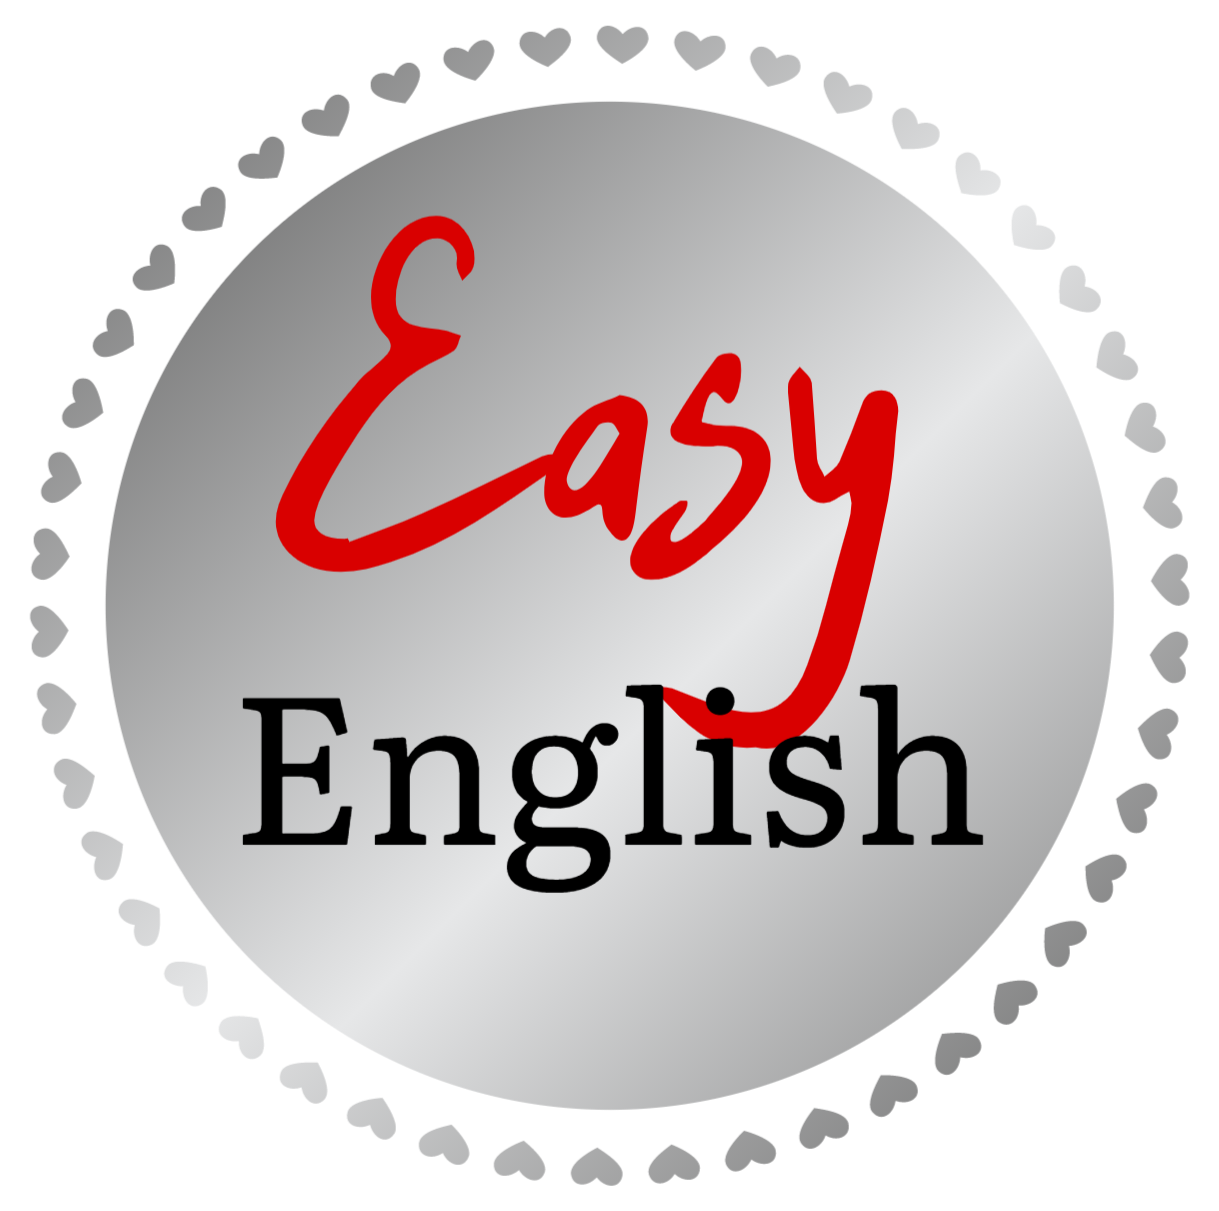 Изи с английского на русский. ИЗИ Инглиш. Легкий английский. Easy English логотип. Easy English картинки.